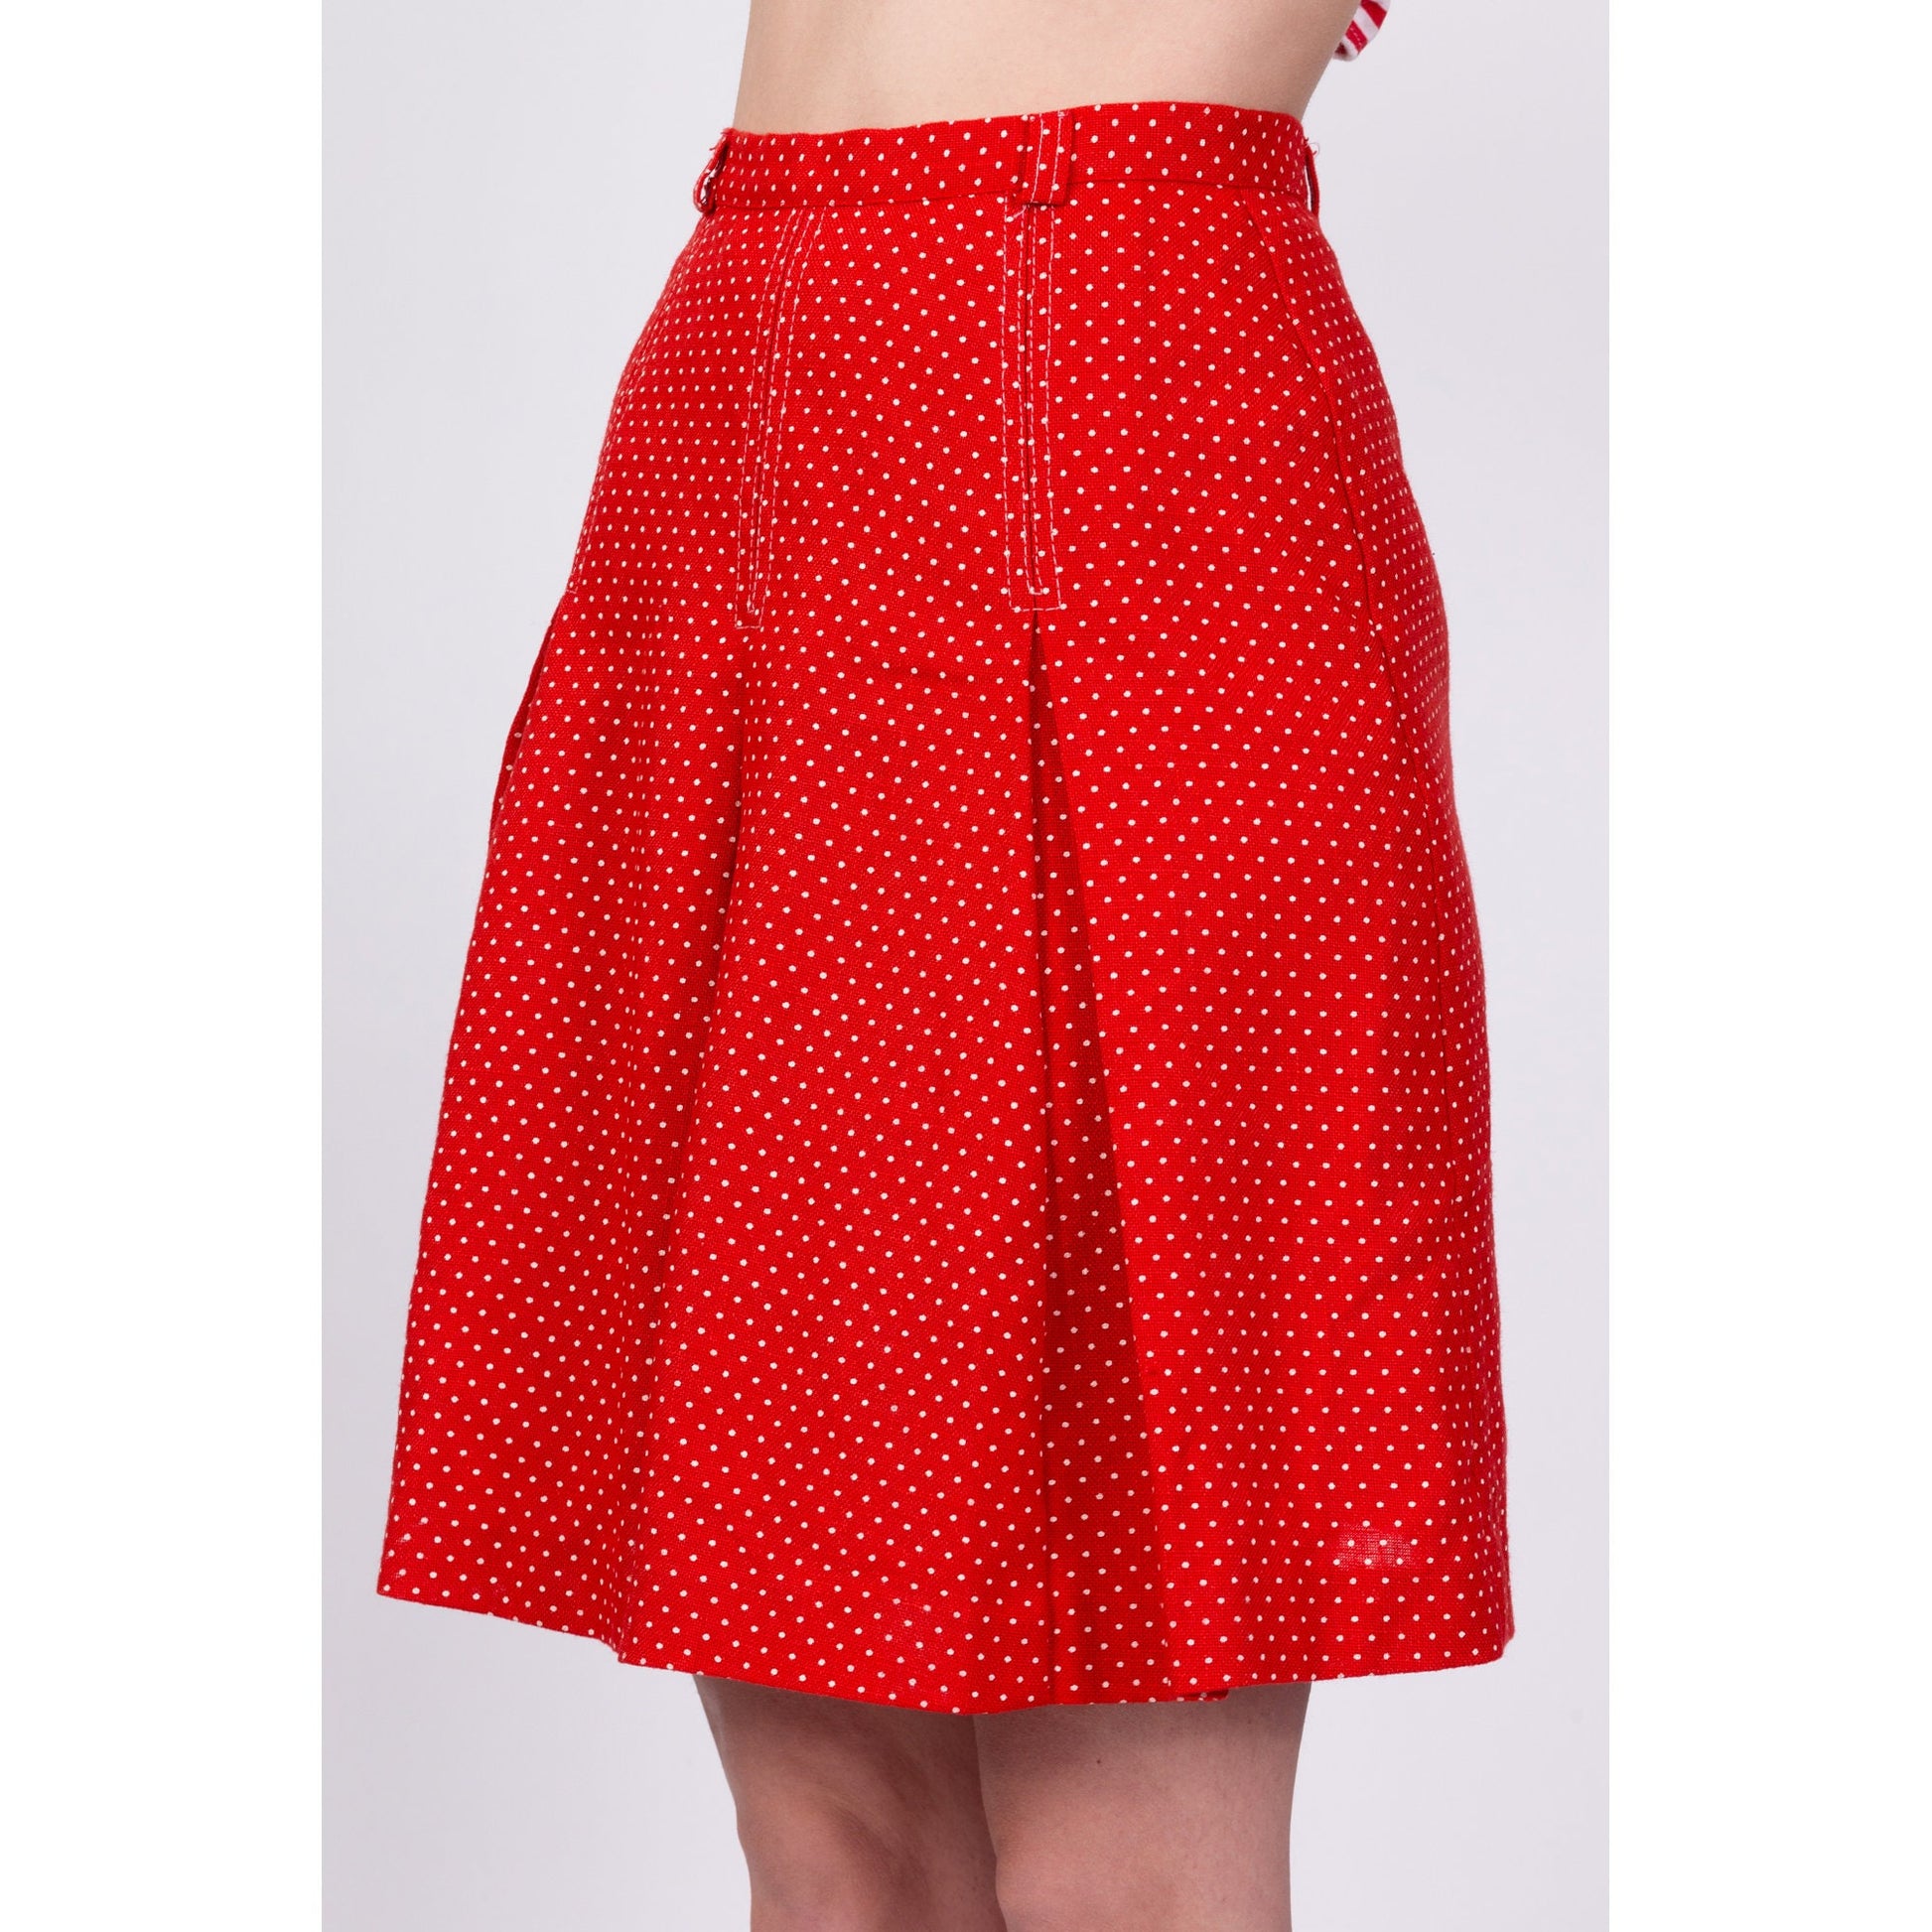 70s Red & White Polka Dot Skirt - Extra Small, 23.5"